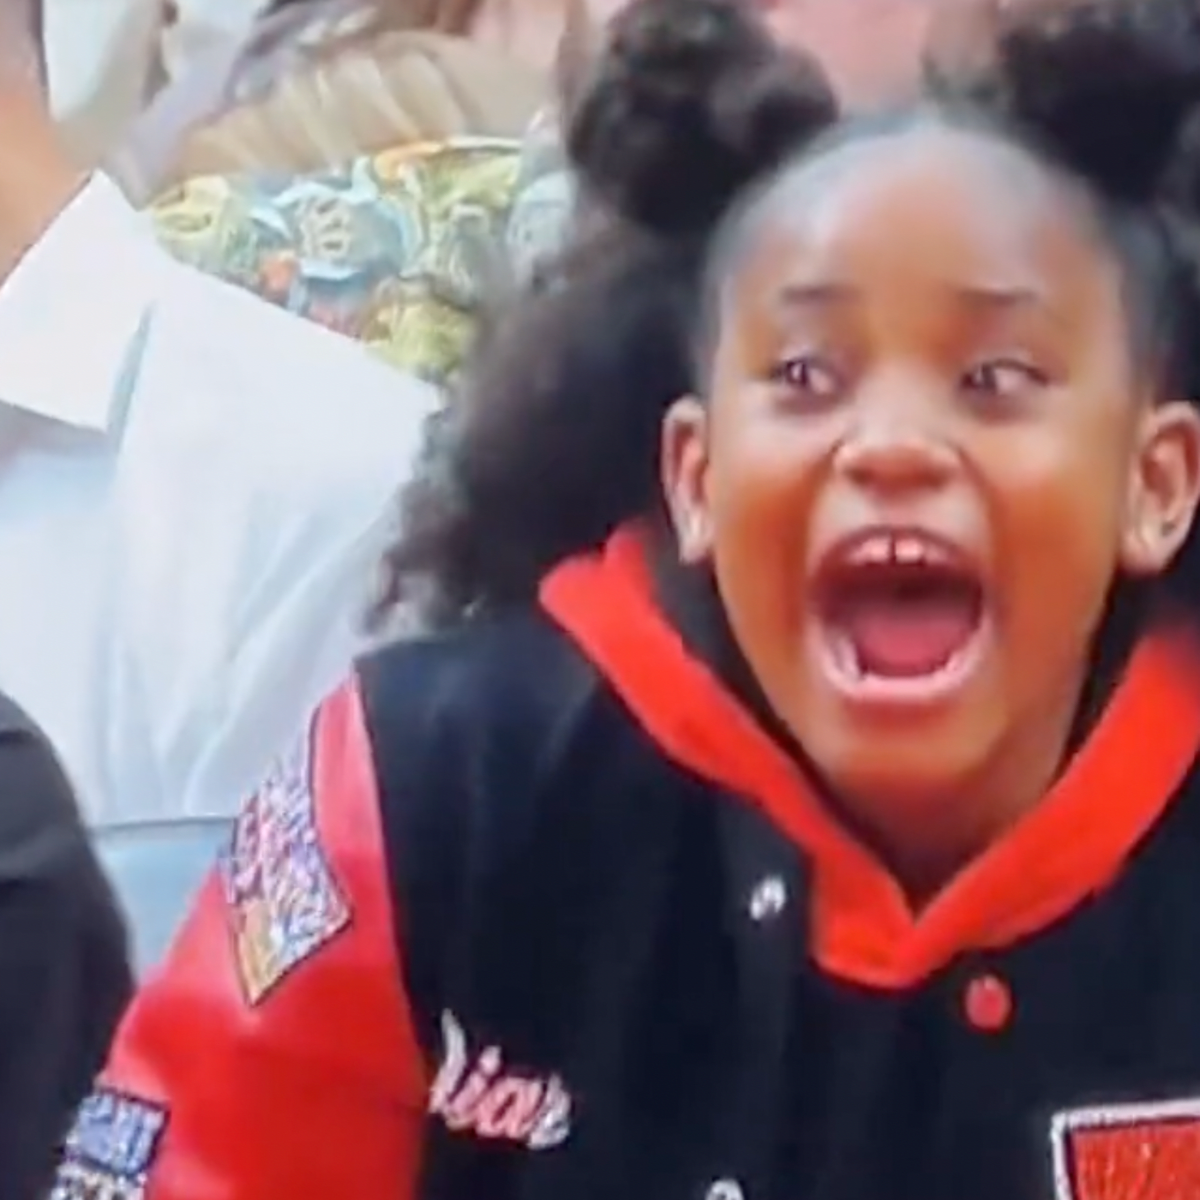 Chicago Bulls: DeMar DeRozan's 9-year-old daughter received threats